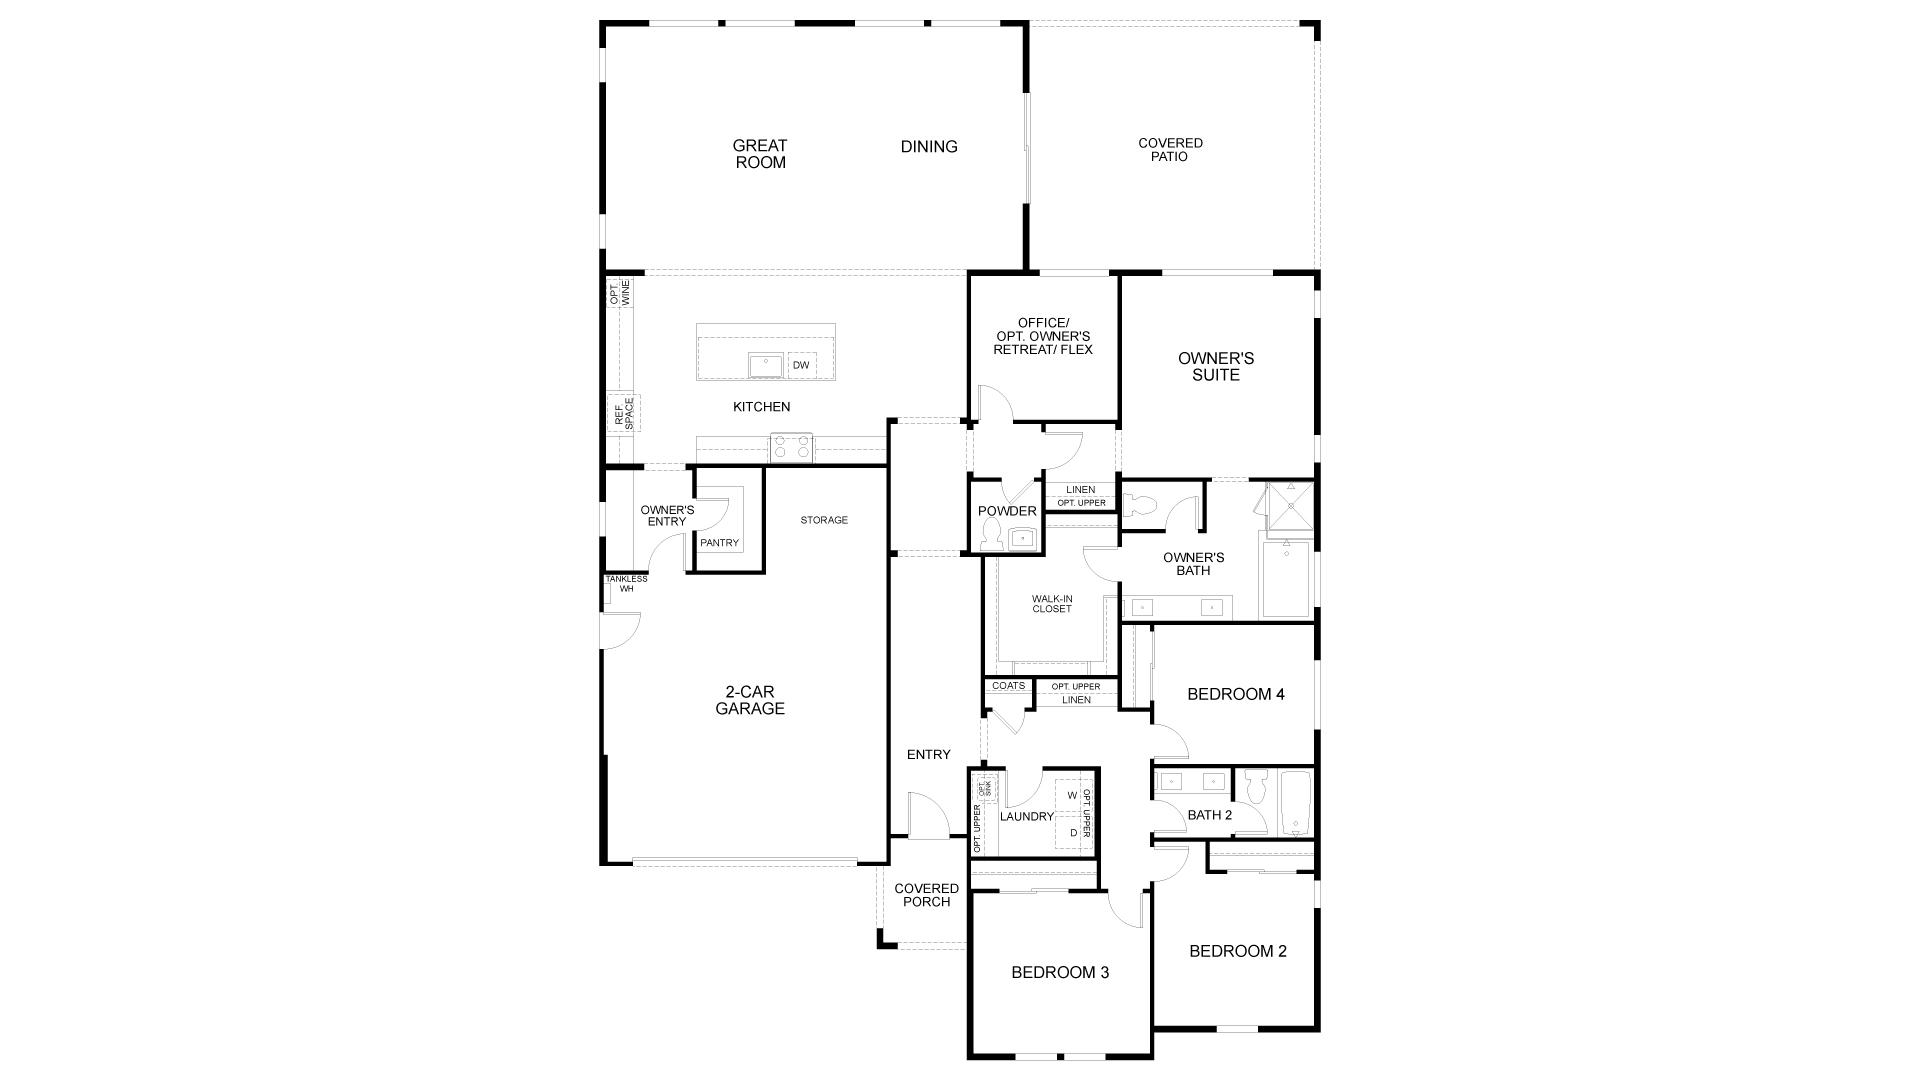 Residence 1 Floorplan. 2,613sf New Home in Brentwood, CA